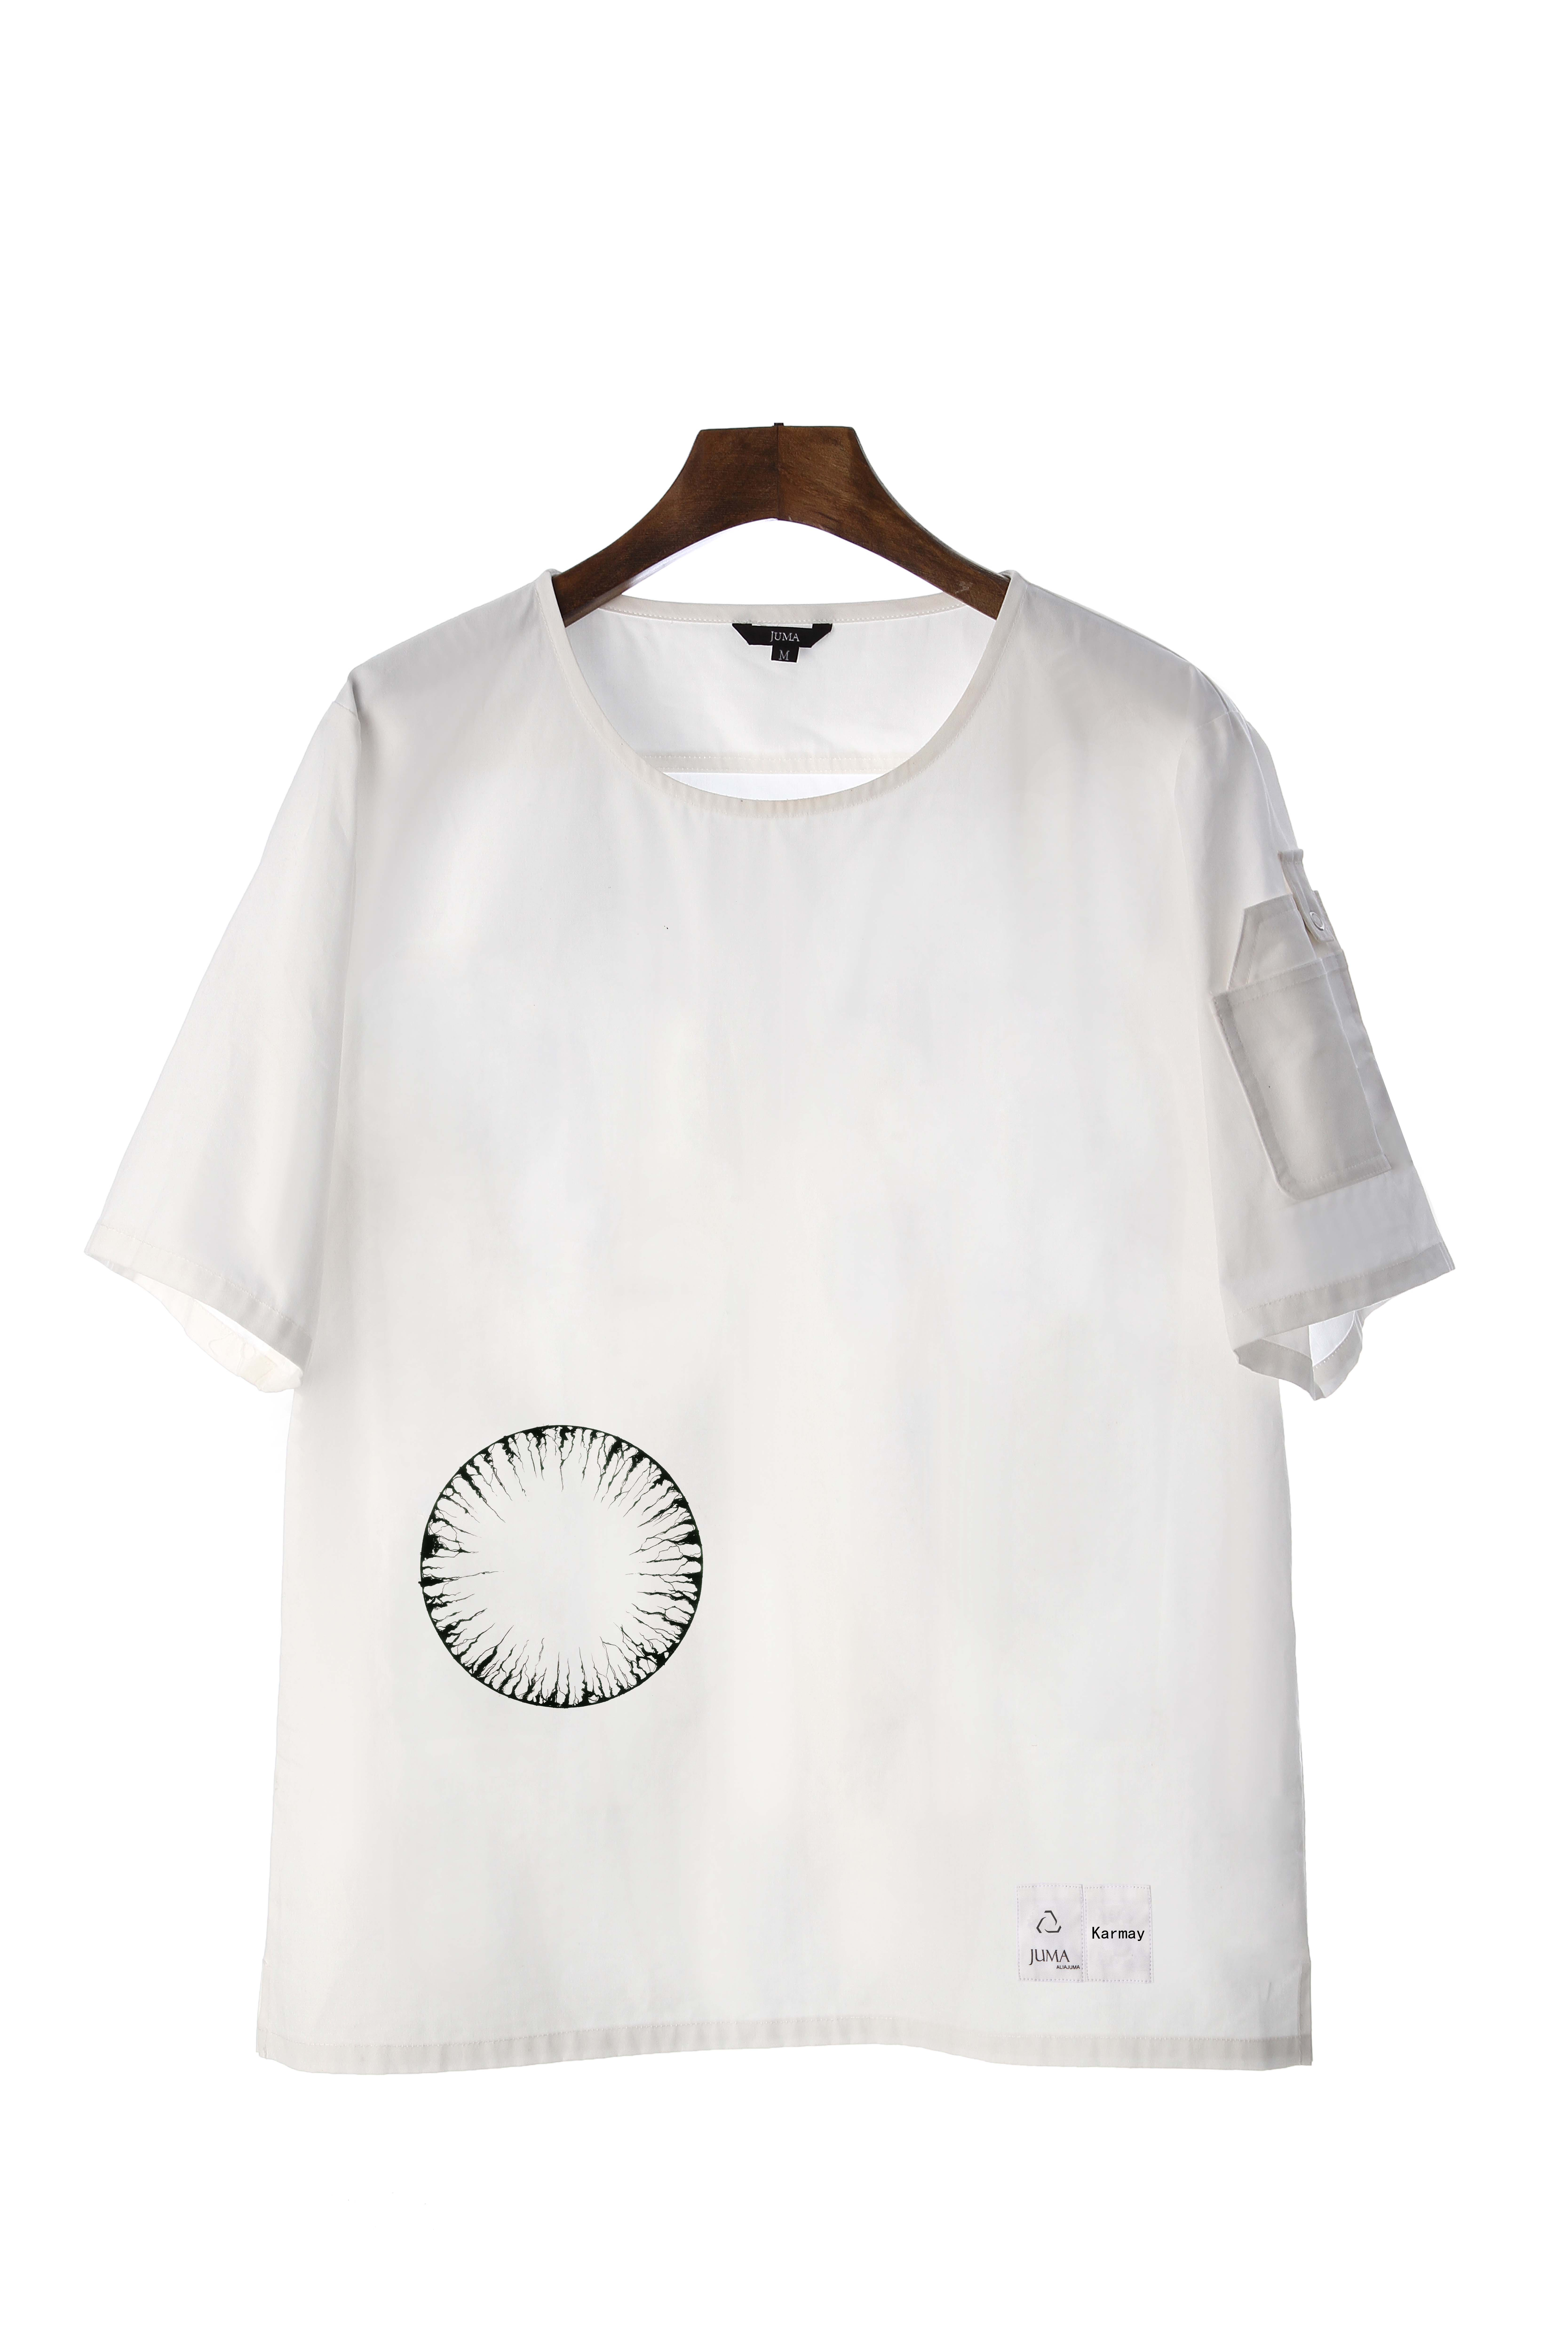 Z+B 印花短袖衬衫 - 4 个再生水瓶 - 多色｜Z+B Printed Short Sleeve Shirt - 4 Recycled Water Bottles - Multicolor